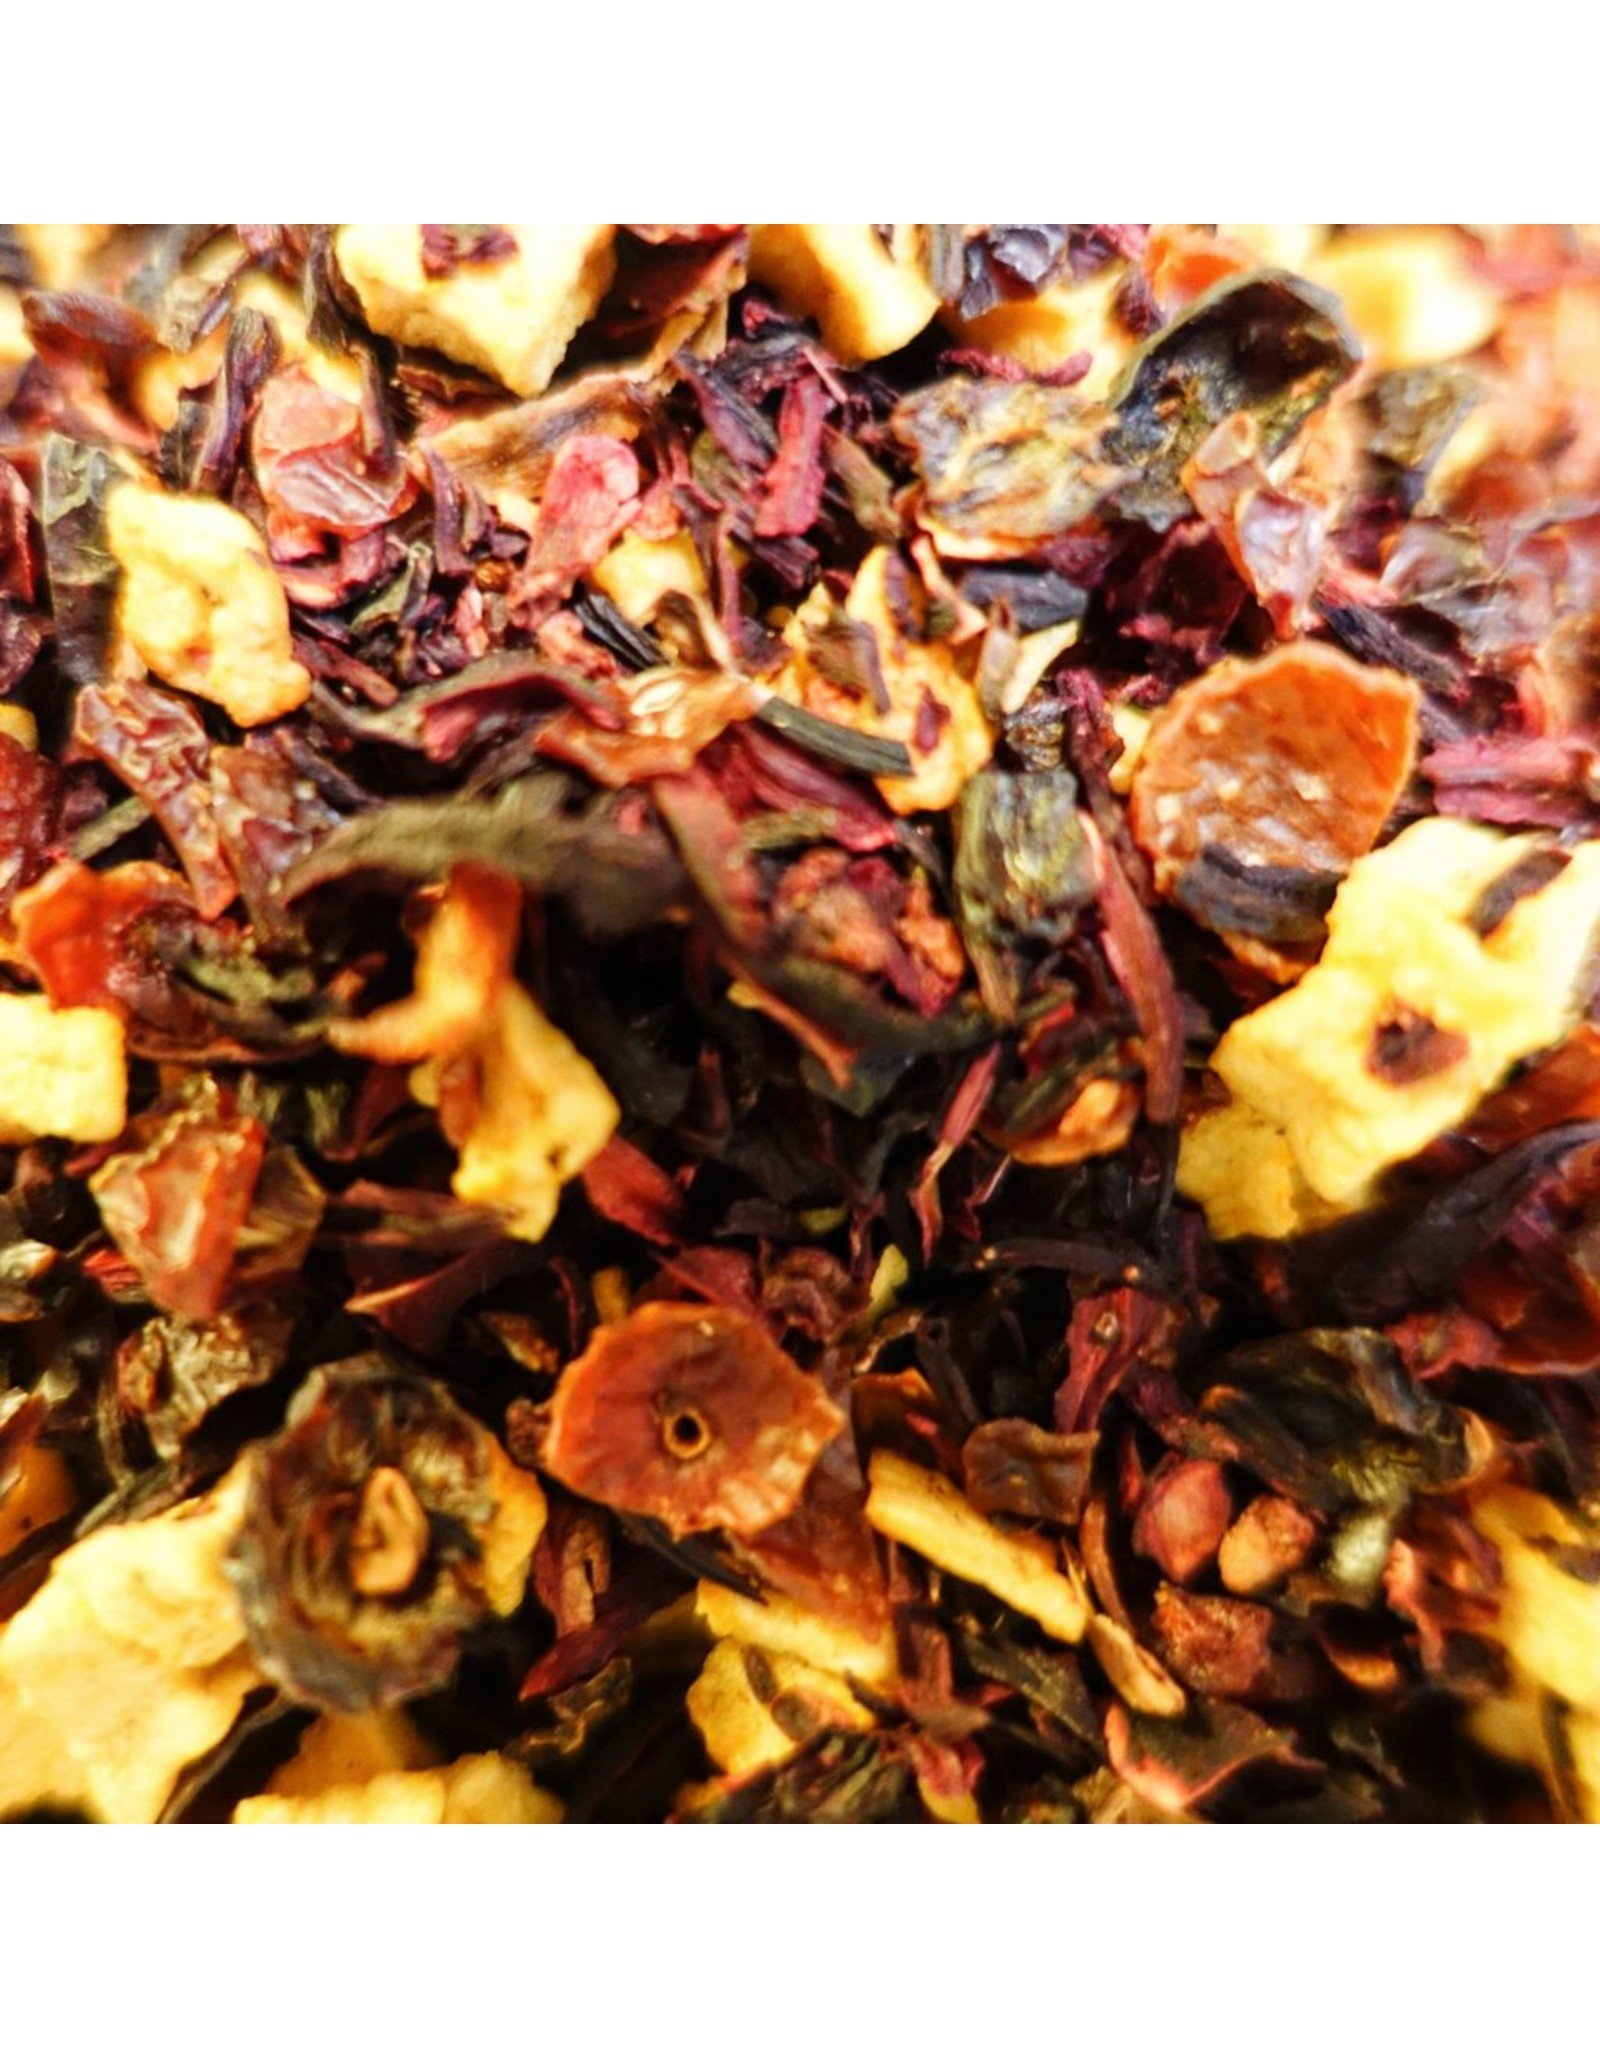 Herbal Blends West Sedona Raspberry Patch